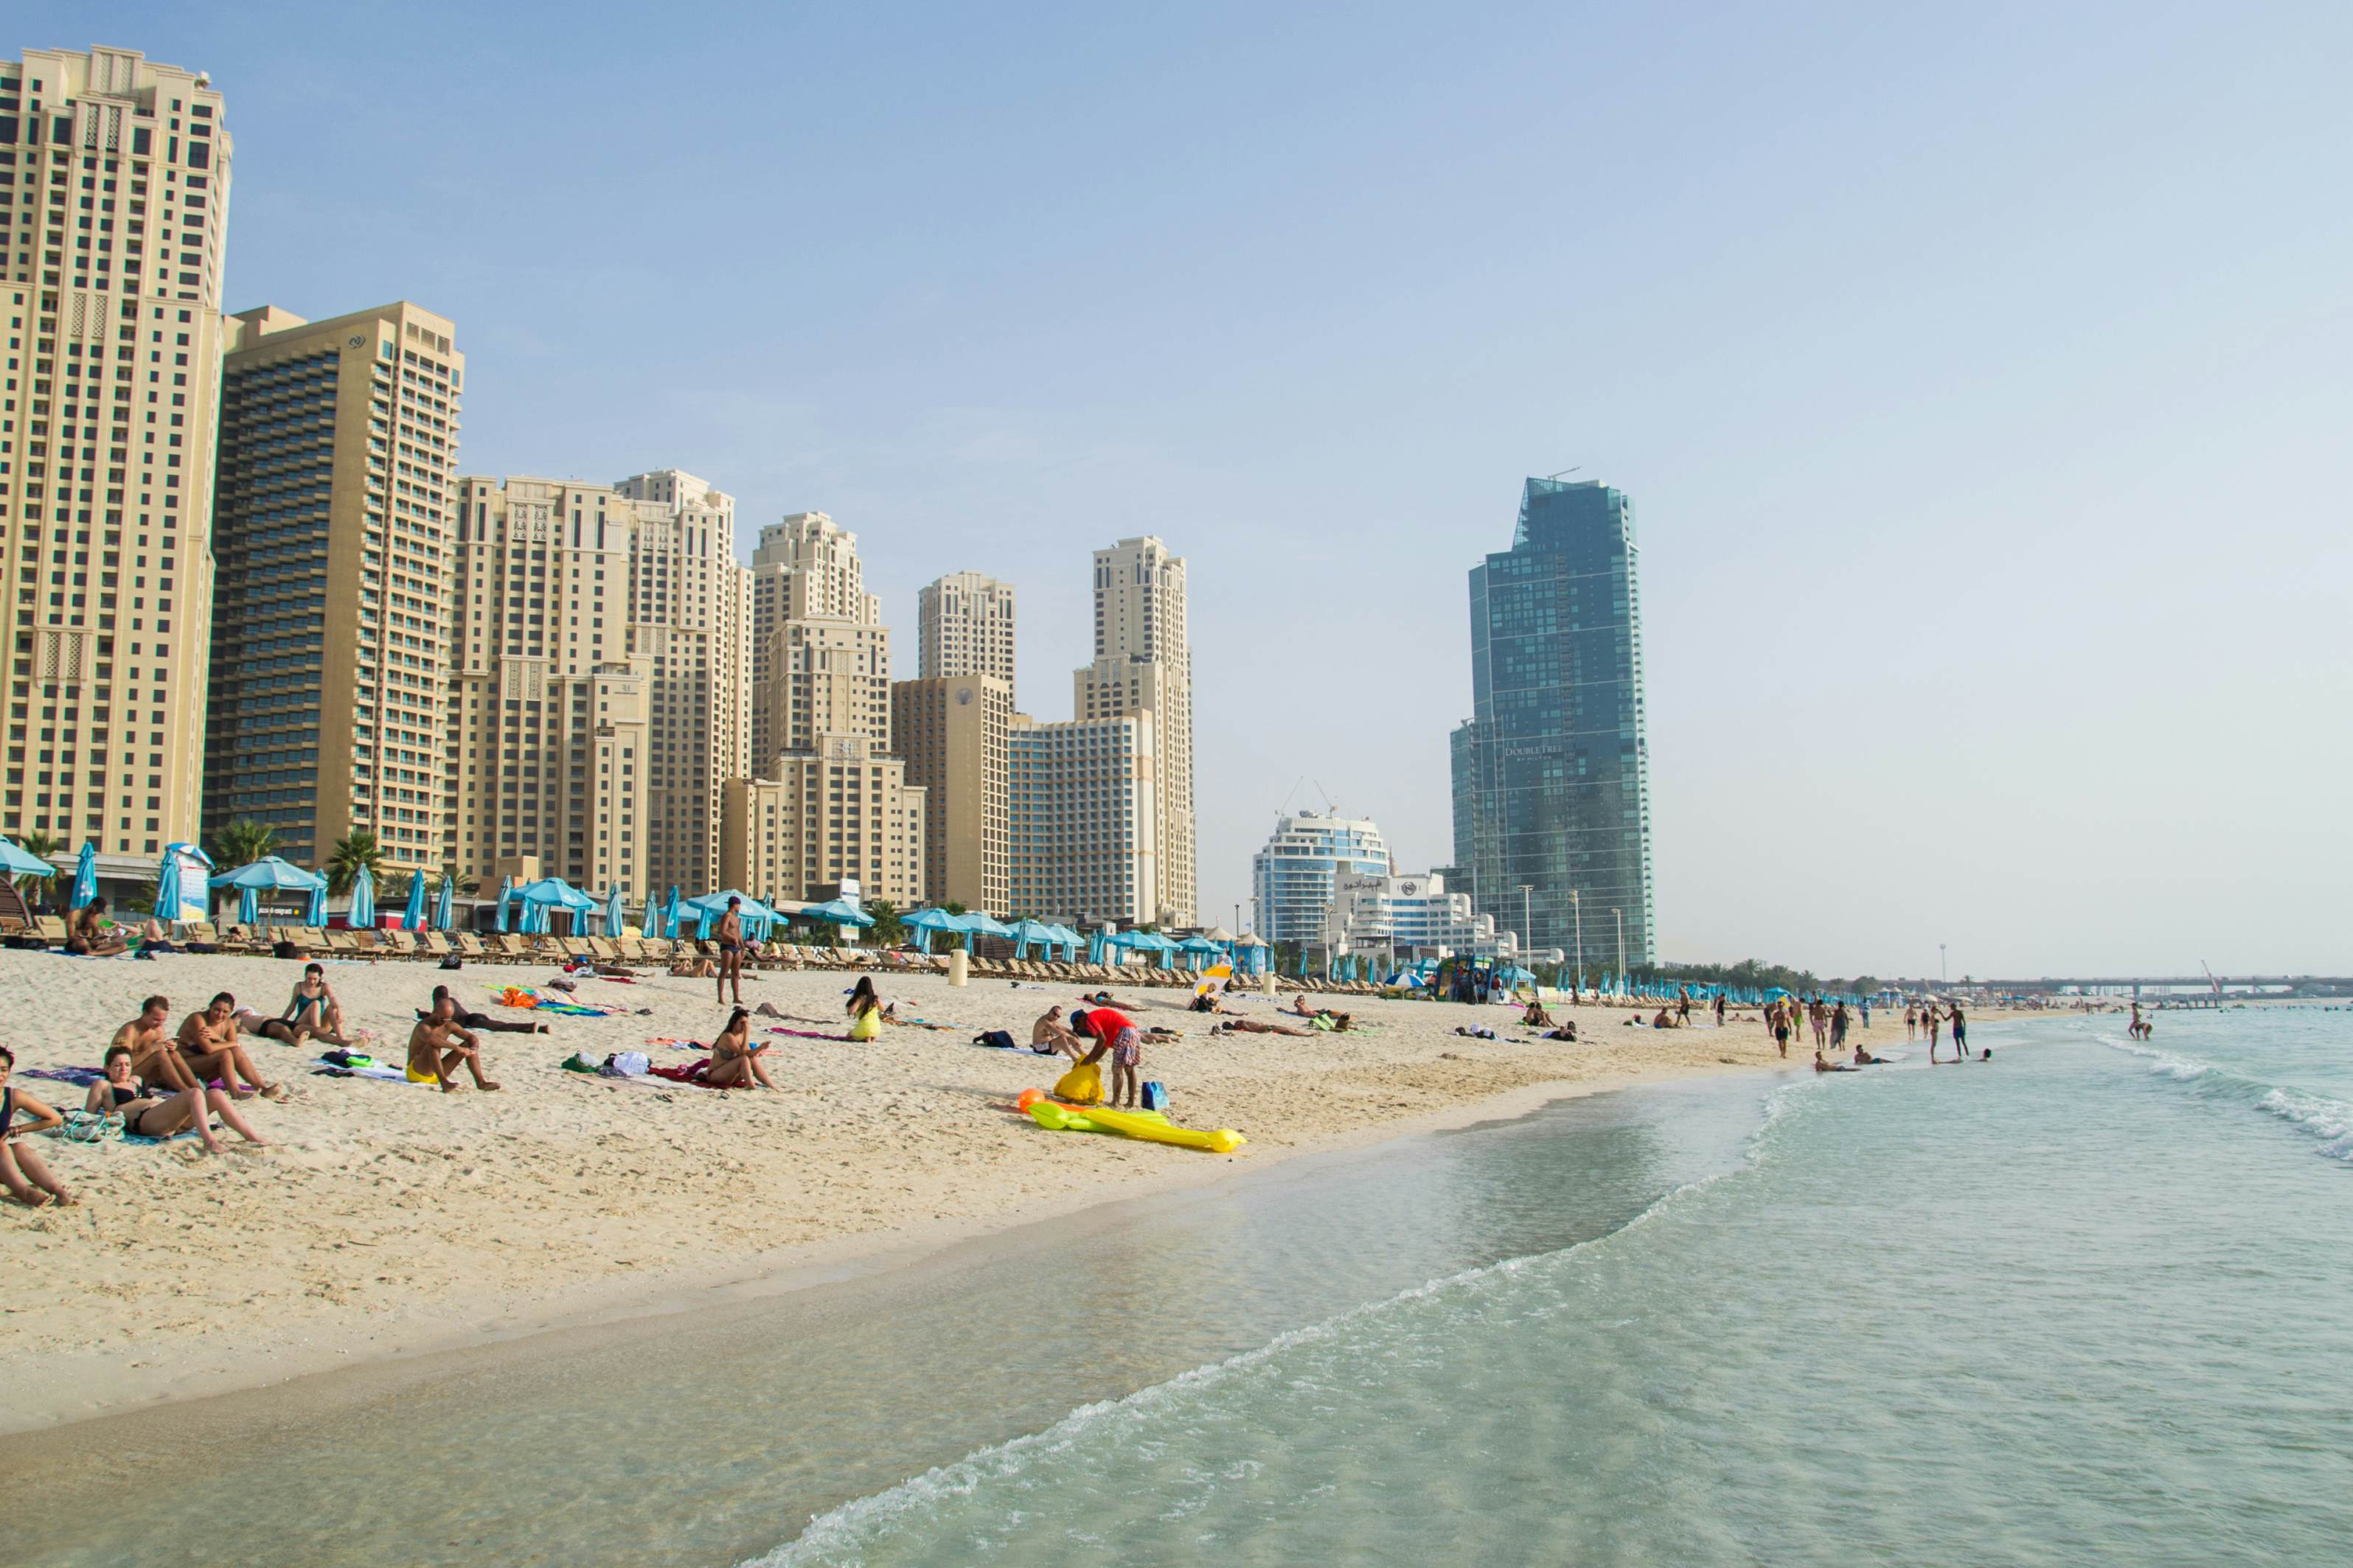 JBR Beach - The Ultimate Guide to Jumeirah Beach Residence